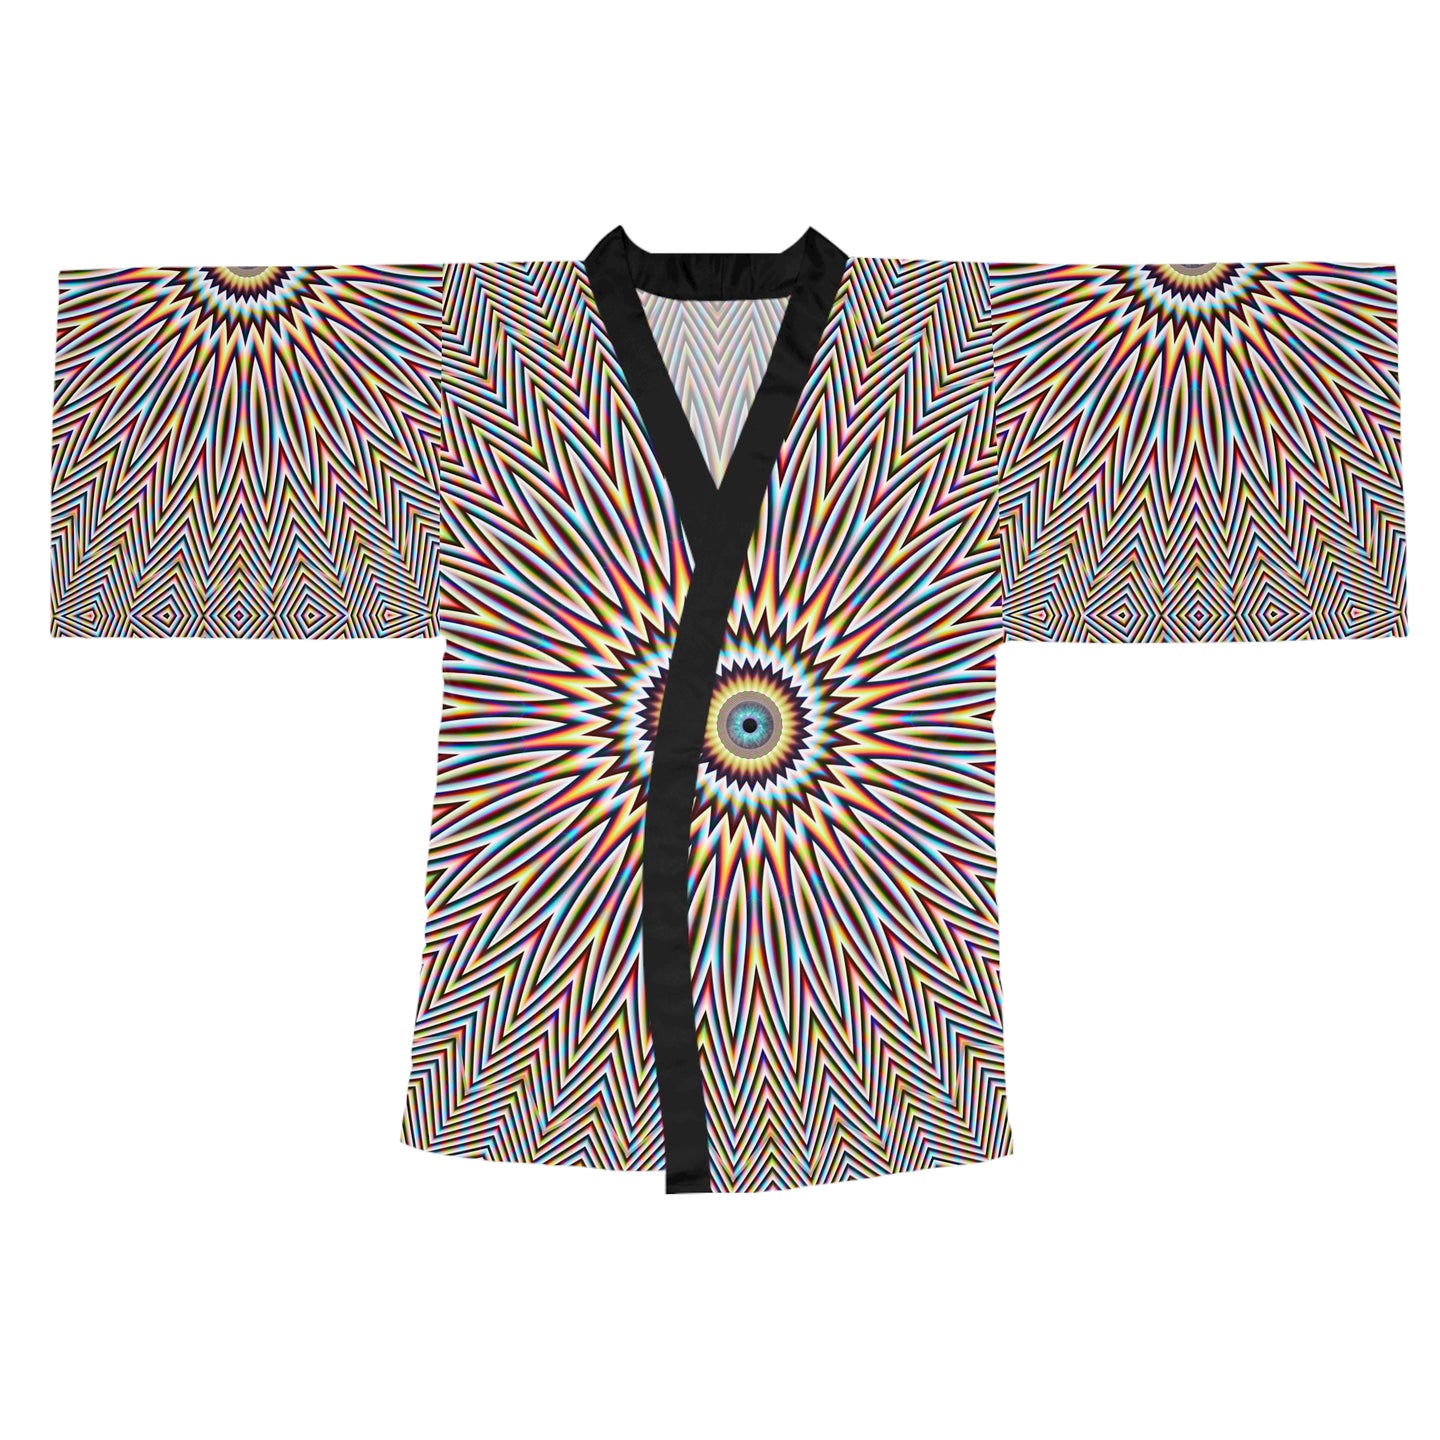 Flicker - Trippy Psychedelic Fractal and sacred Geometry Mandala Kimono Unisex